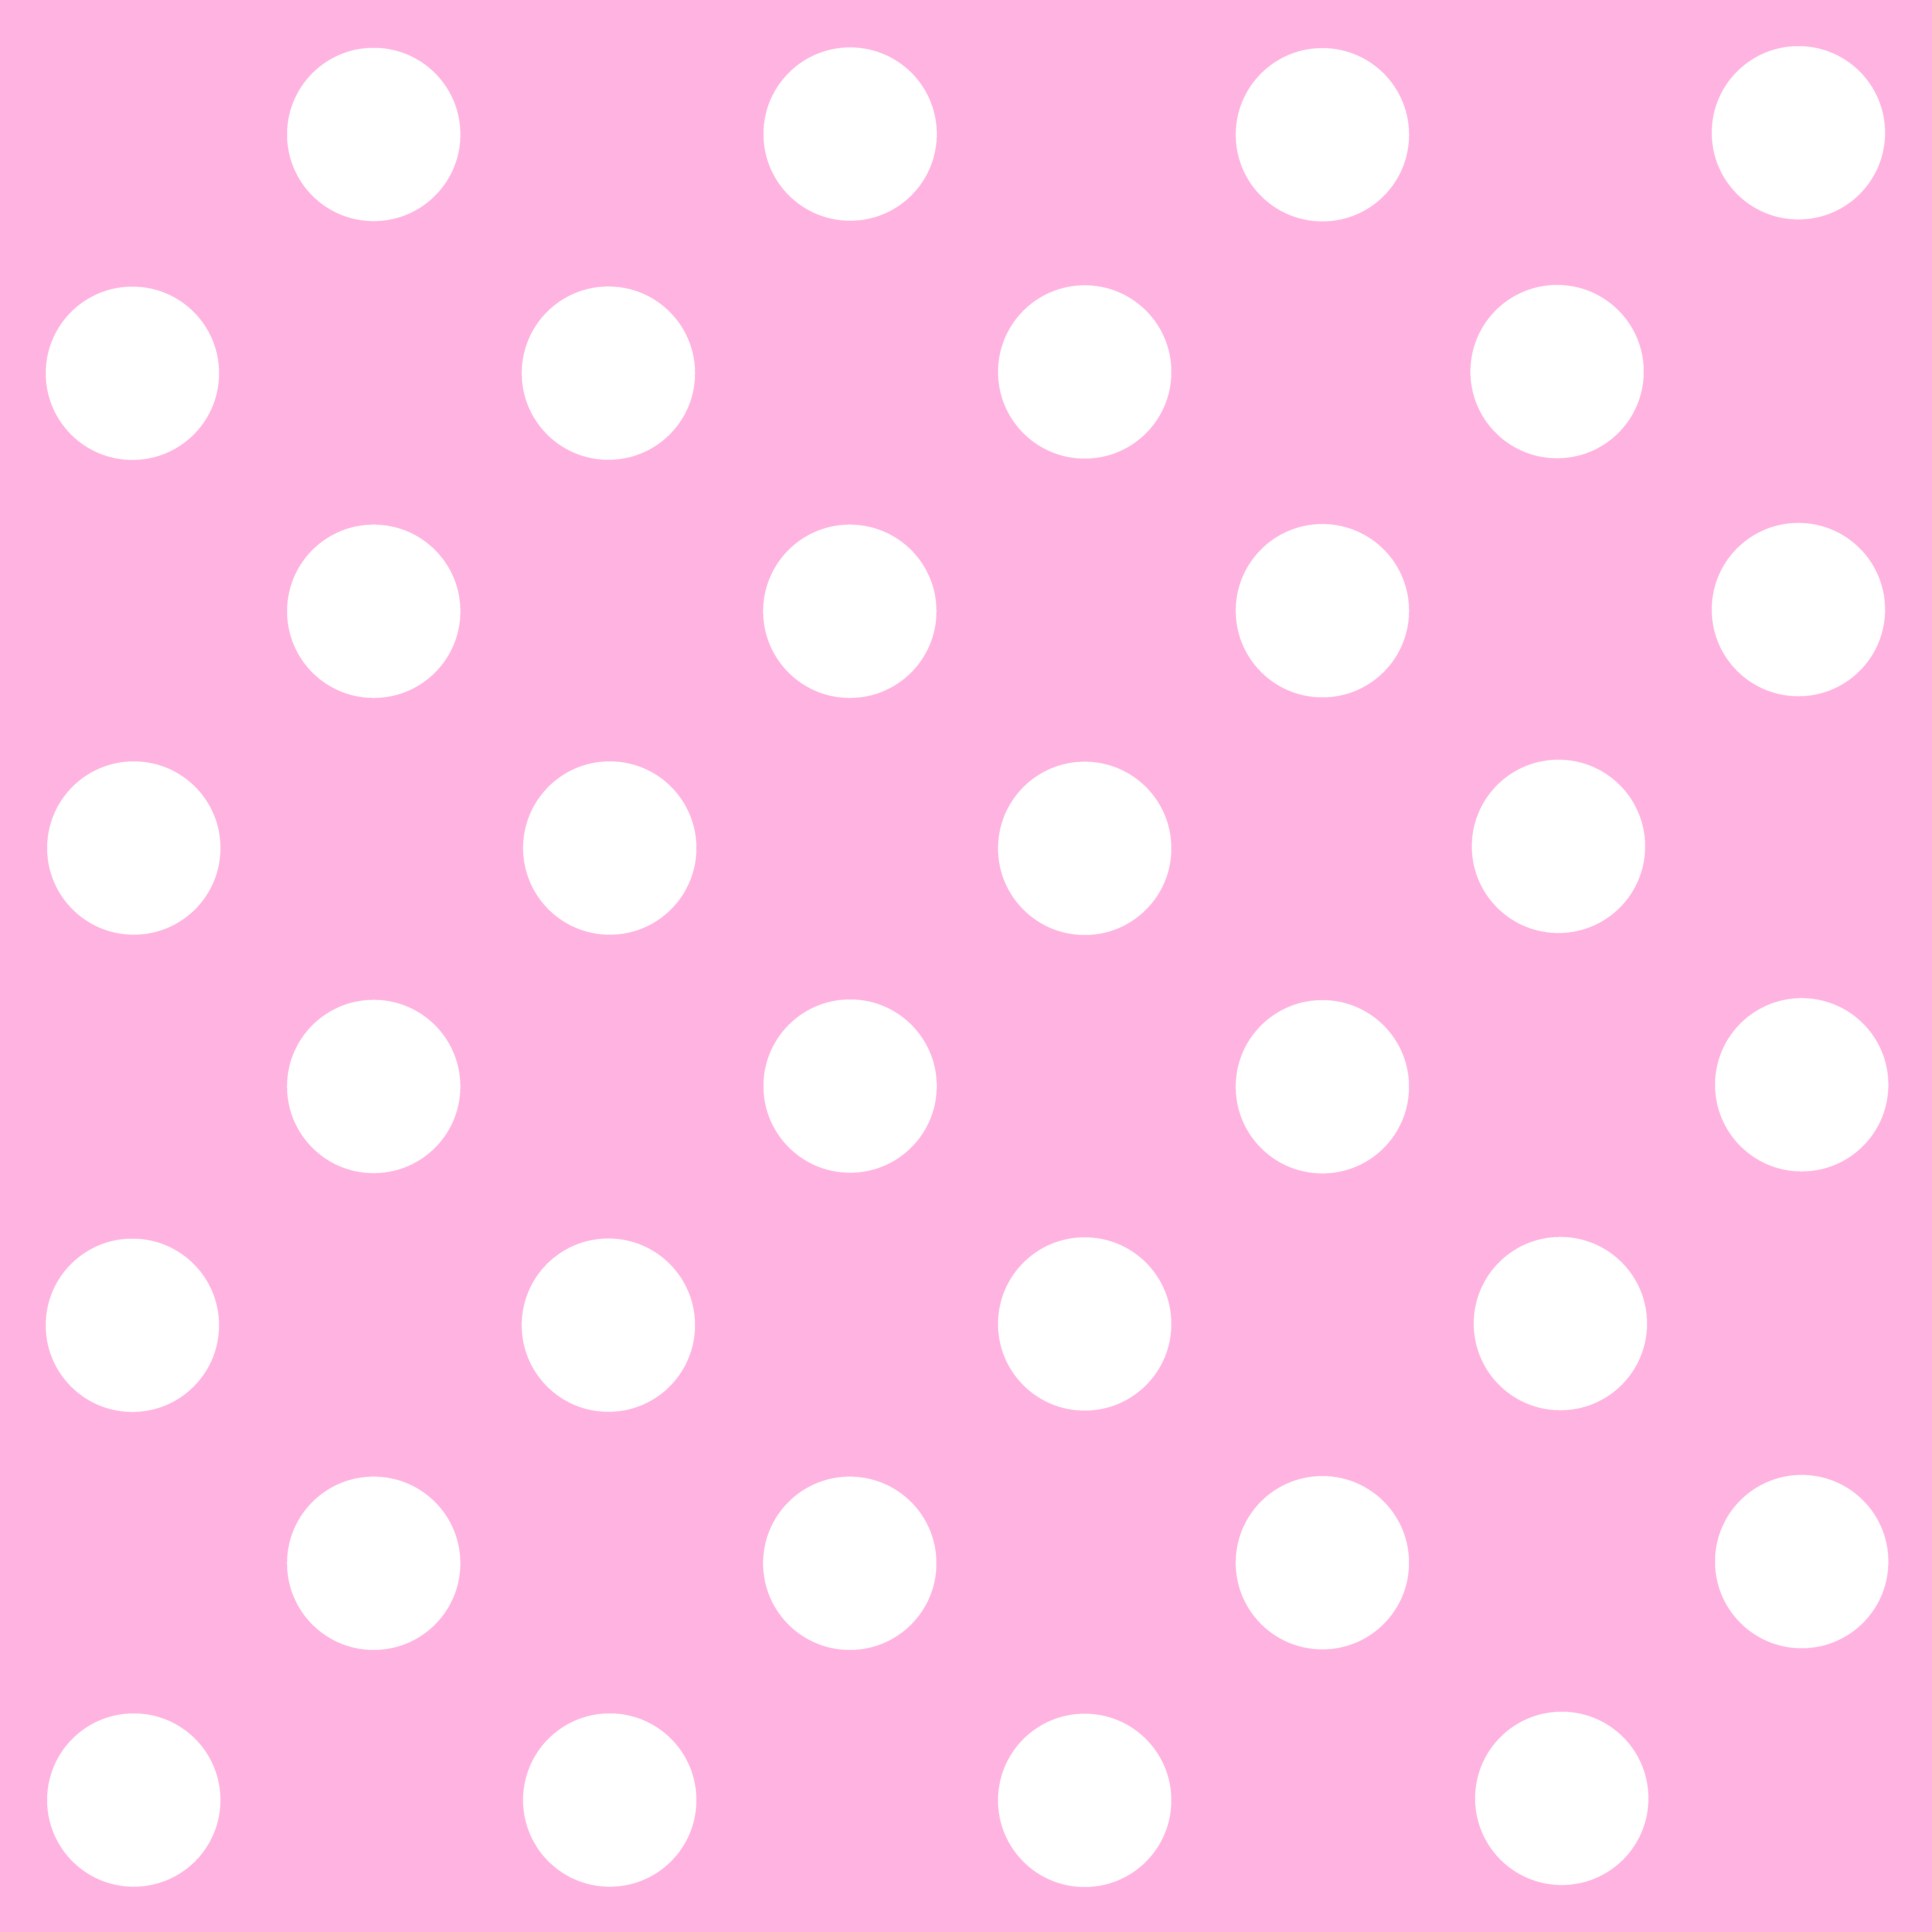 Polka dot background clipart